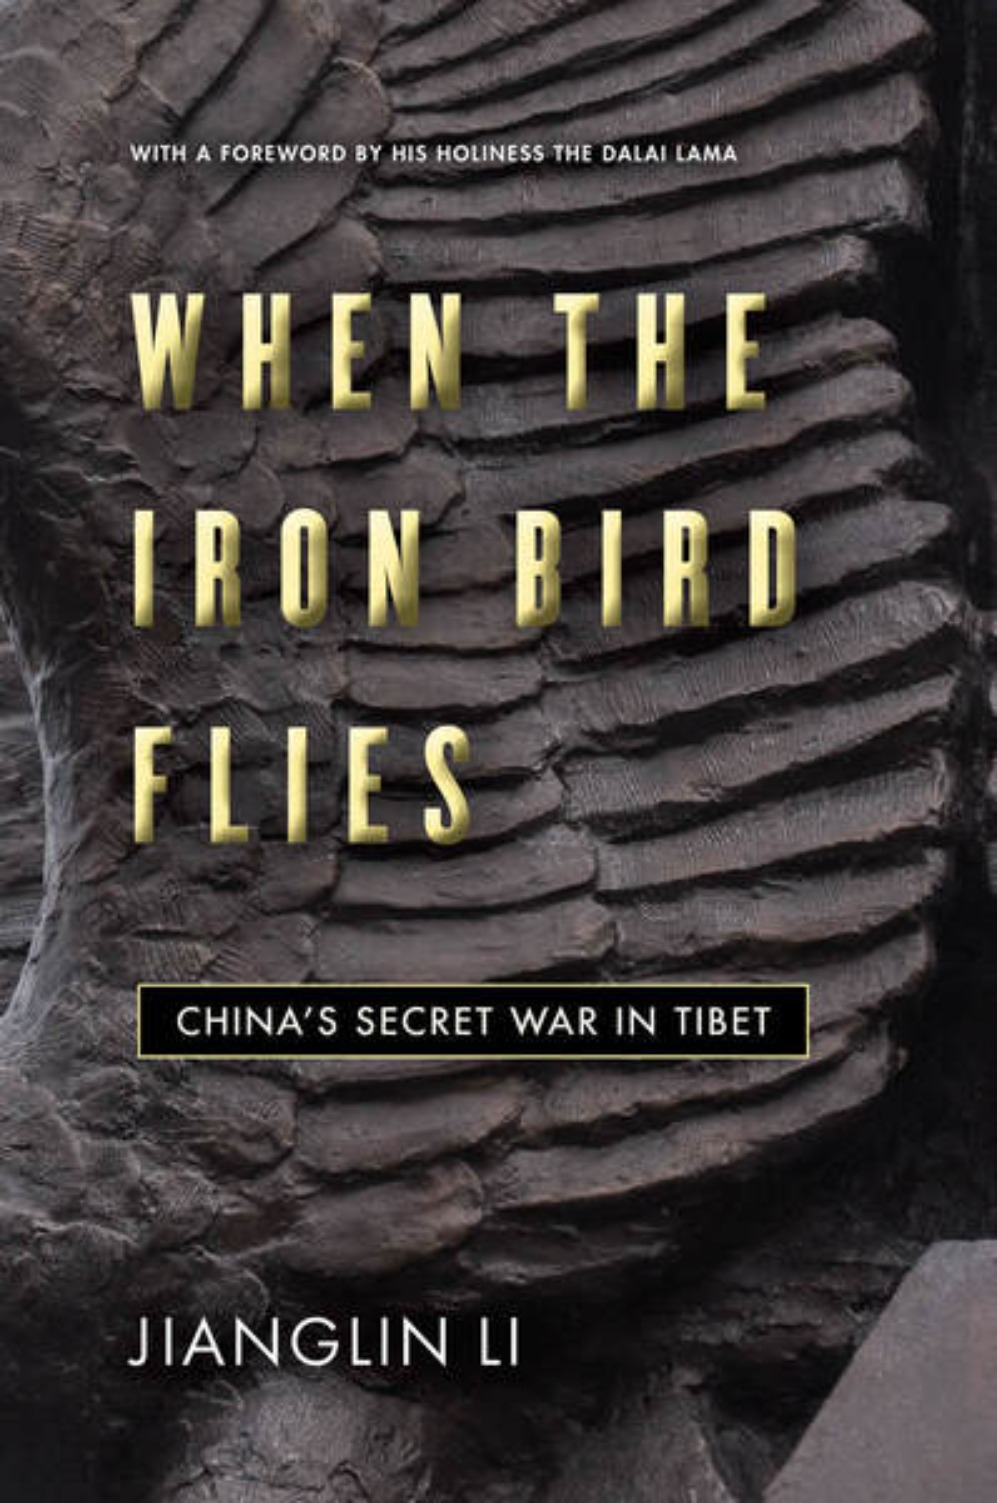 When the Iron Bird Flies by Jianglin Li